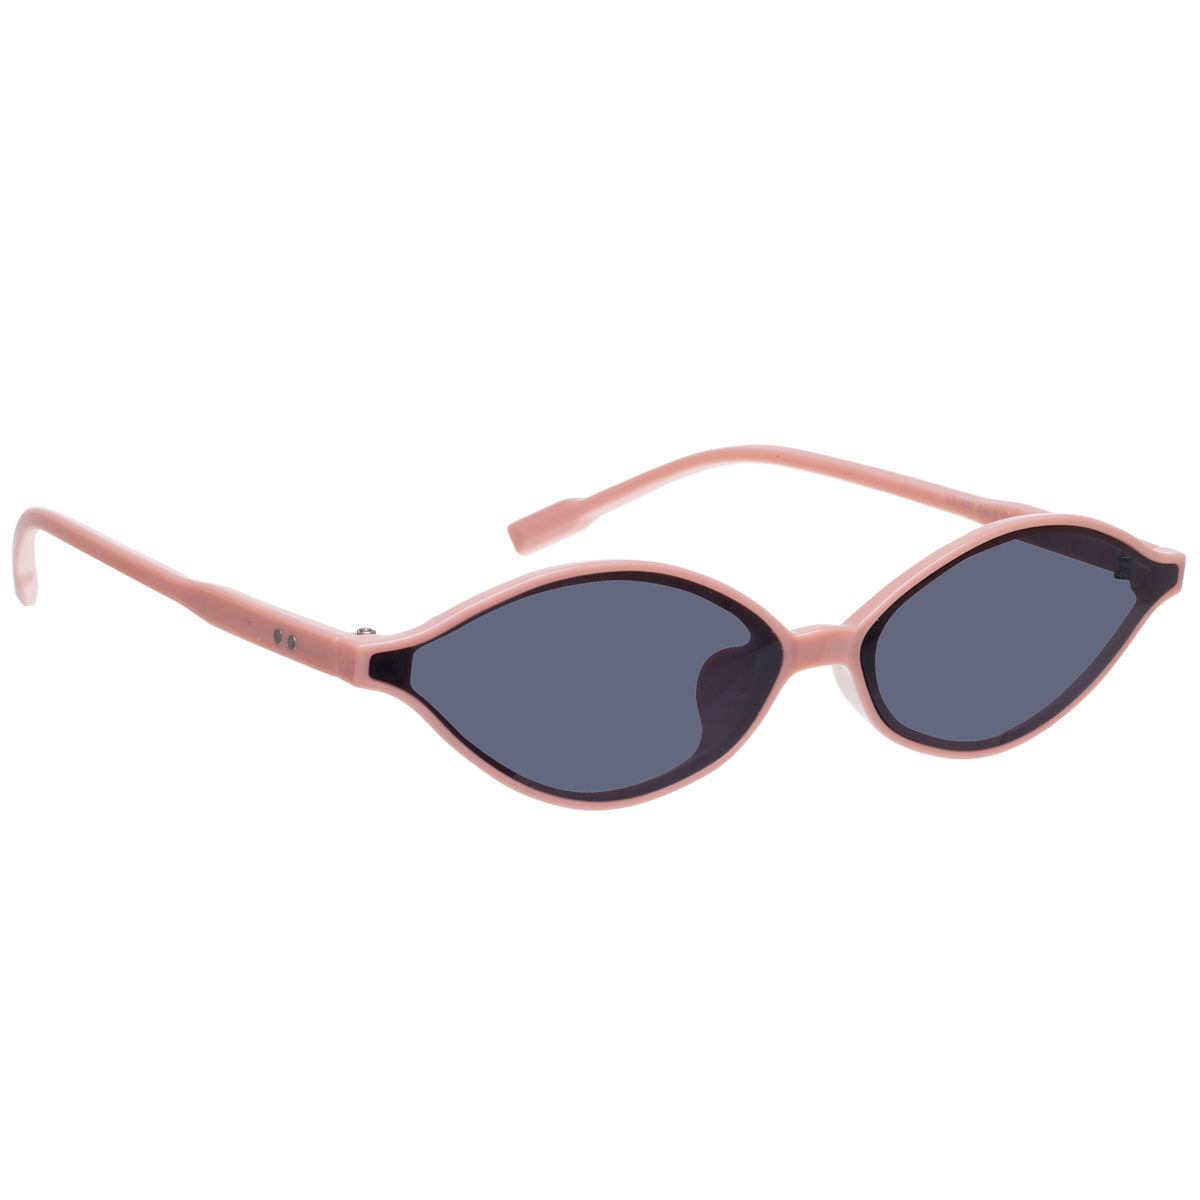 Ovals narrow sunglasses